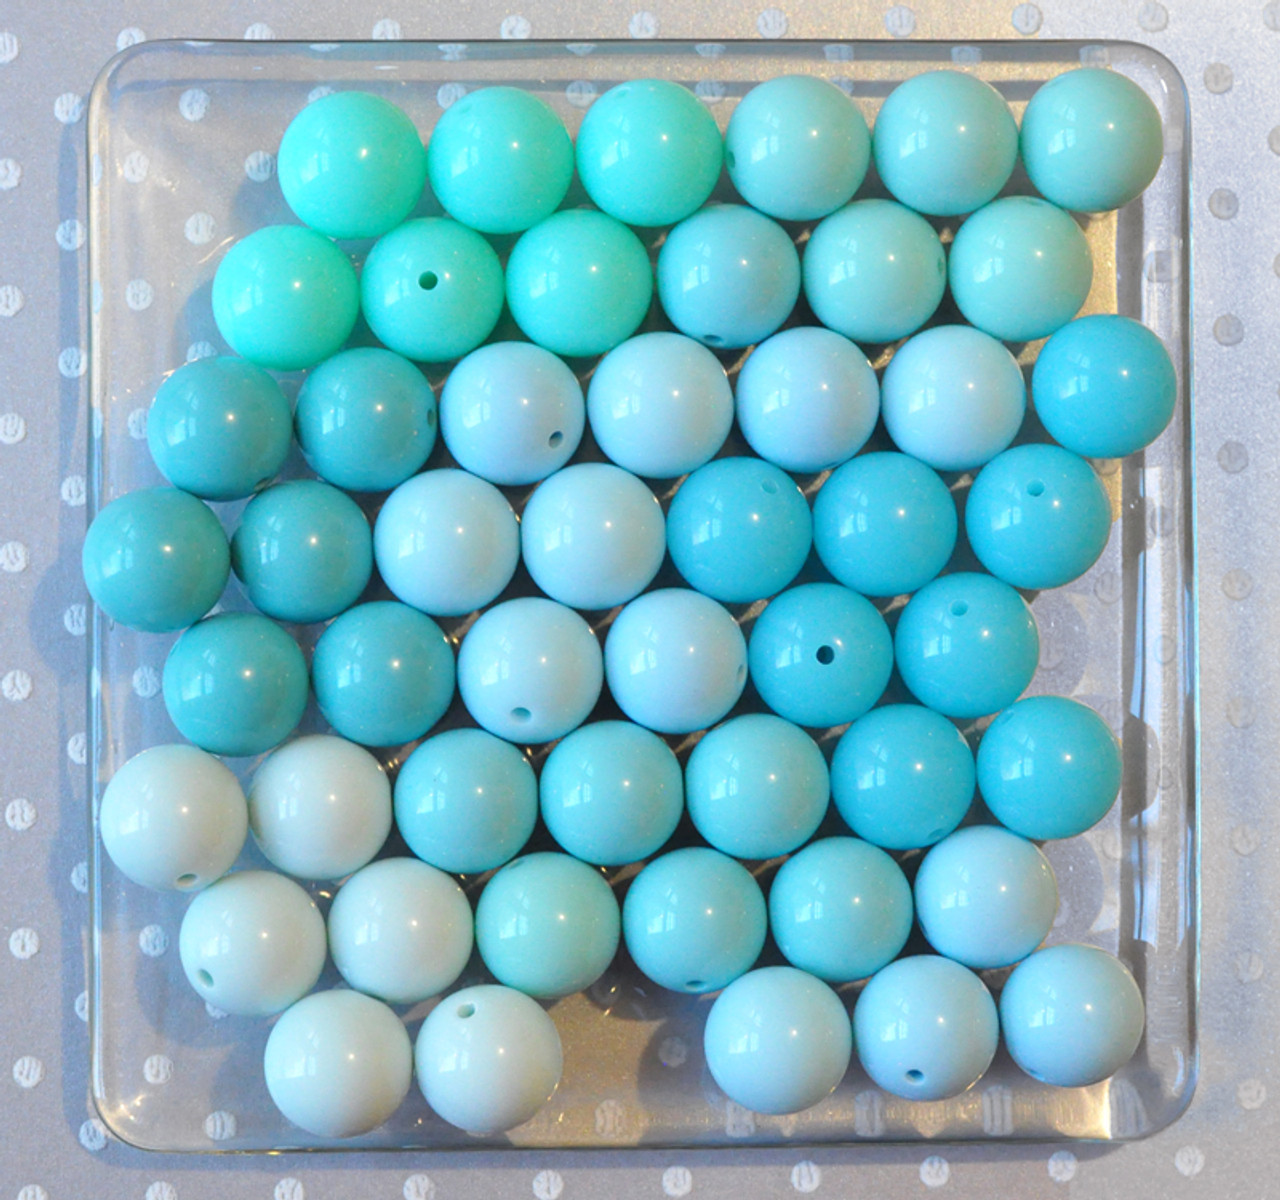 Rhinestone Bubblegum Bead Mix, Chunky Beads Wholesale, 20mm Rhinestone Beads  50 or 100 Piece Set, Bulk Acrylic Beads, Rhinestone Variety Mix 